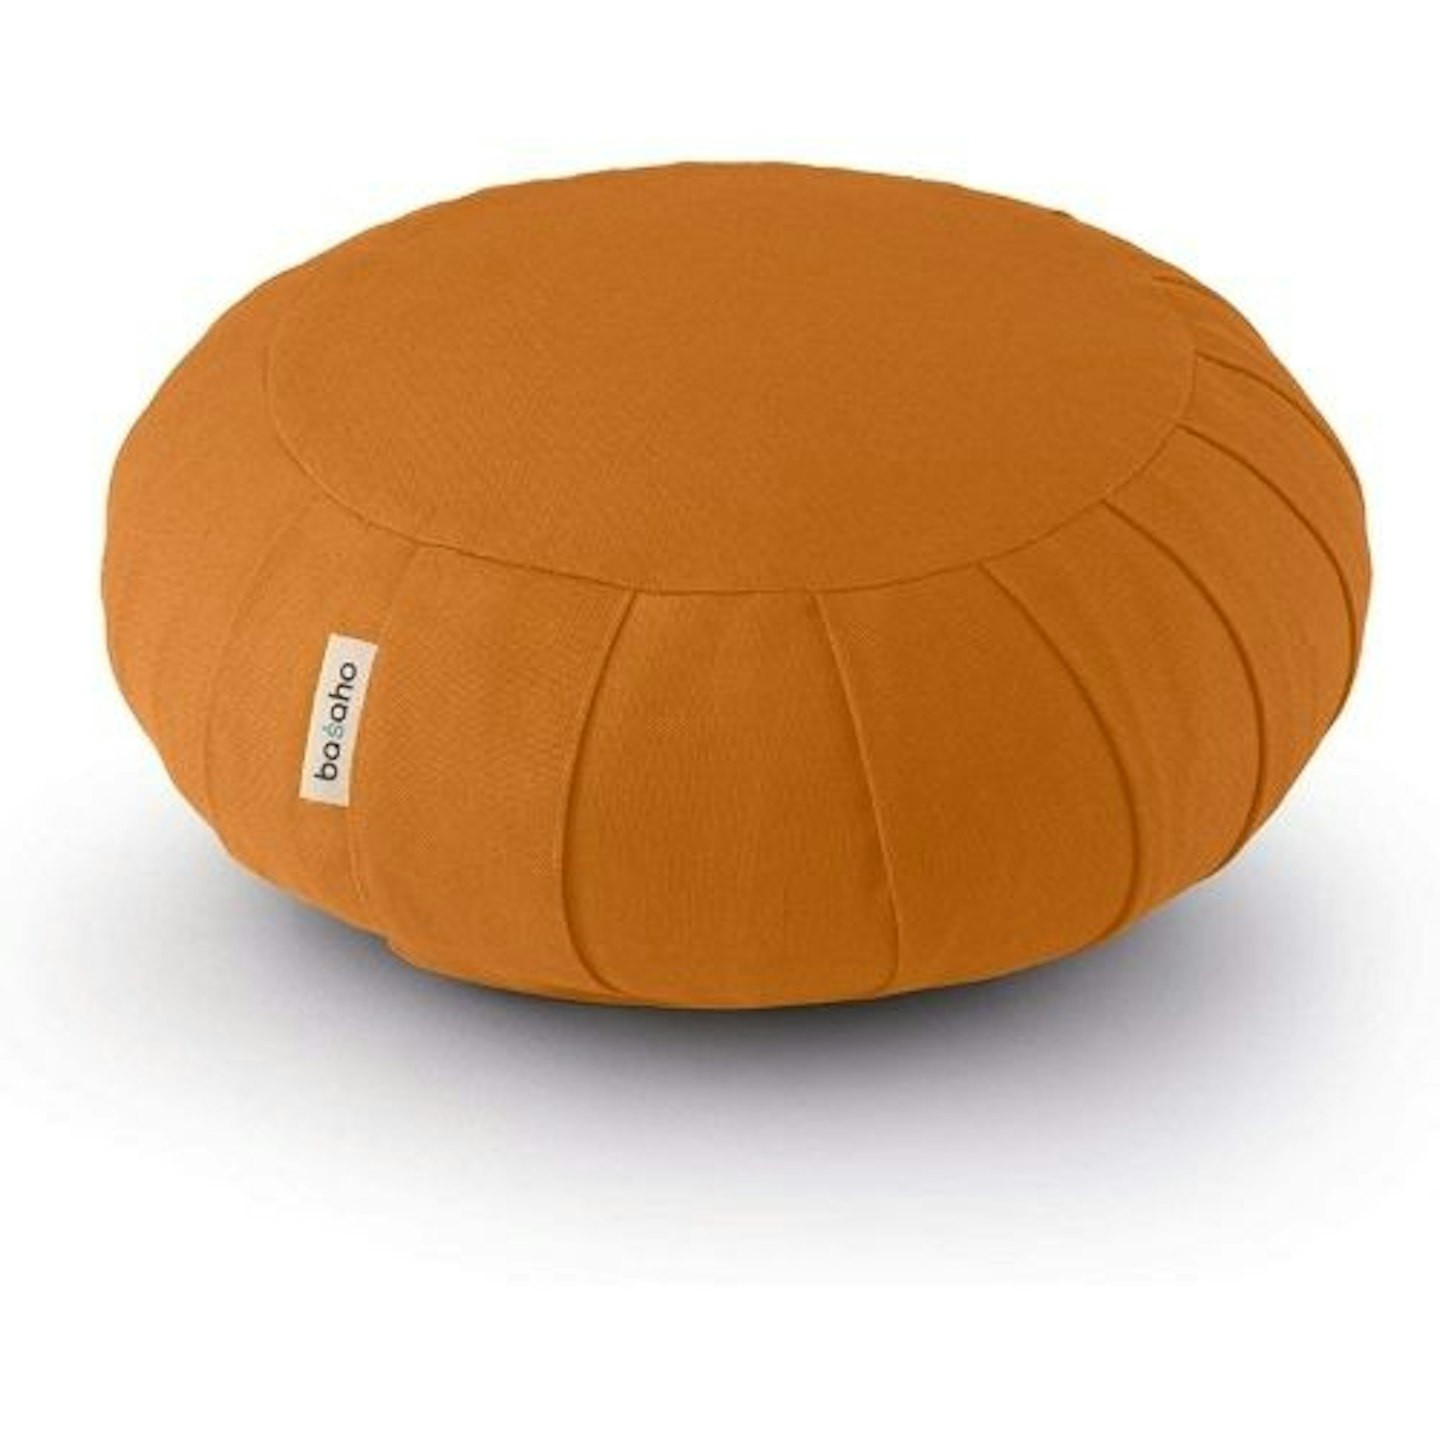 Basaho CLASSIC Zafu Meditation Cushion | Organic Cotton | Buckwheat Hulls | Removable Washable Cover